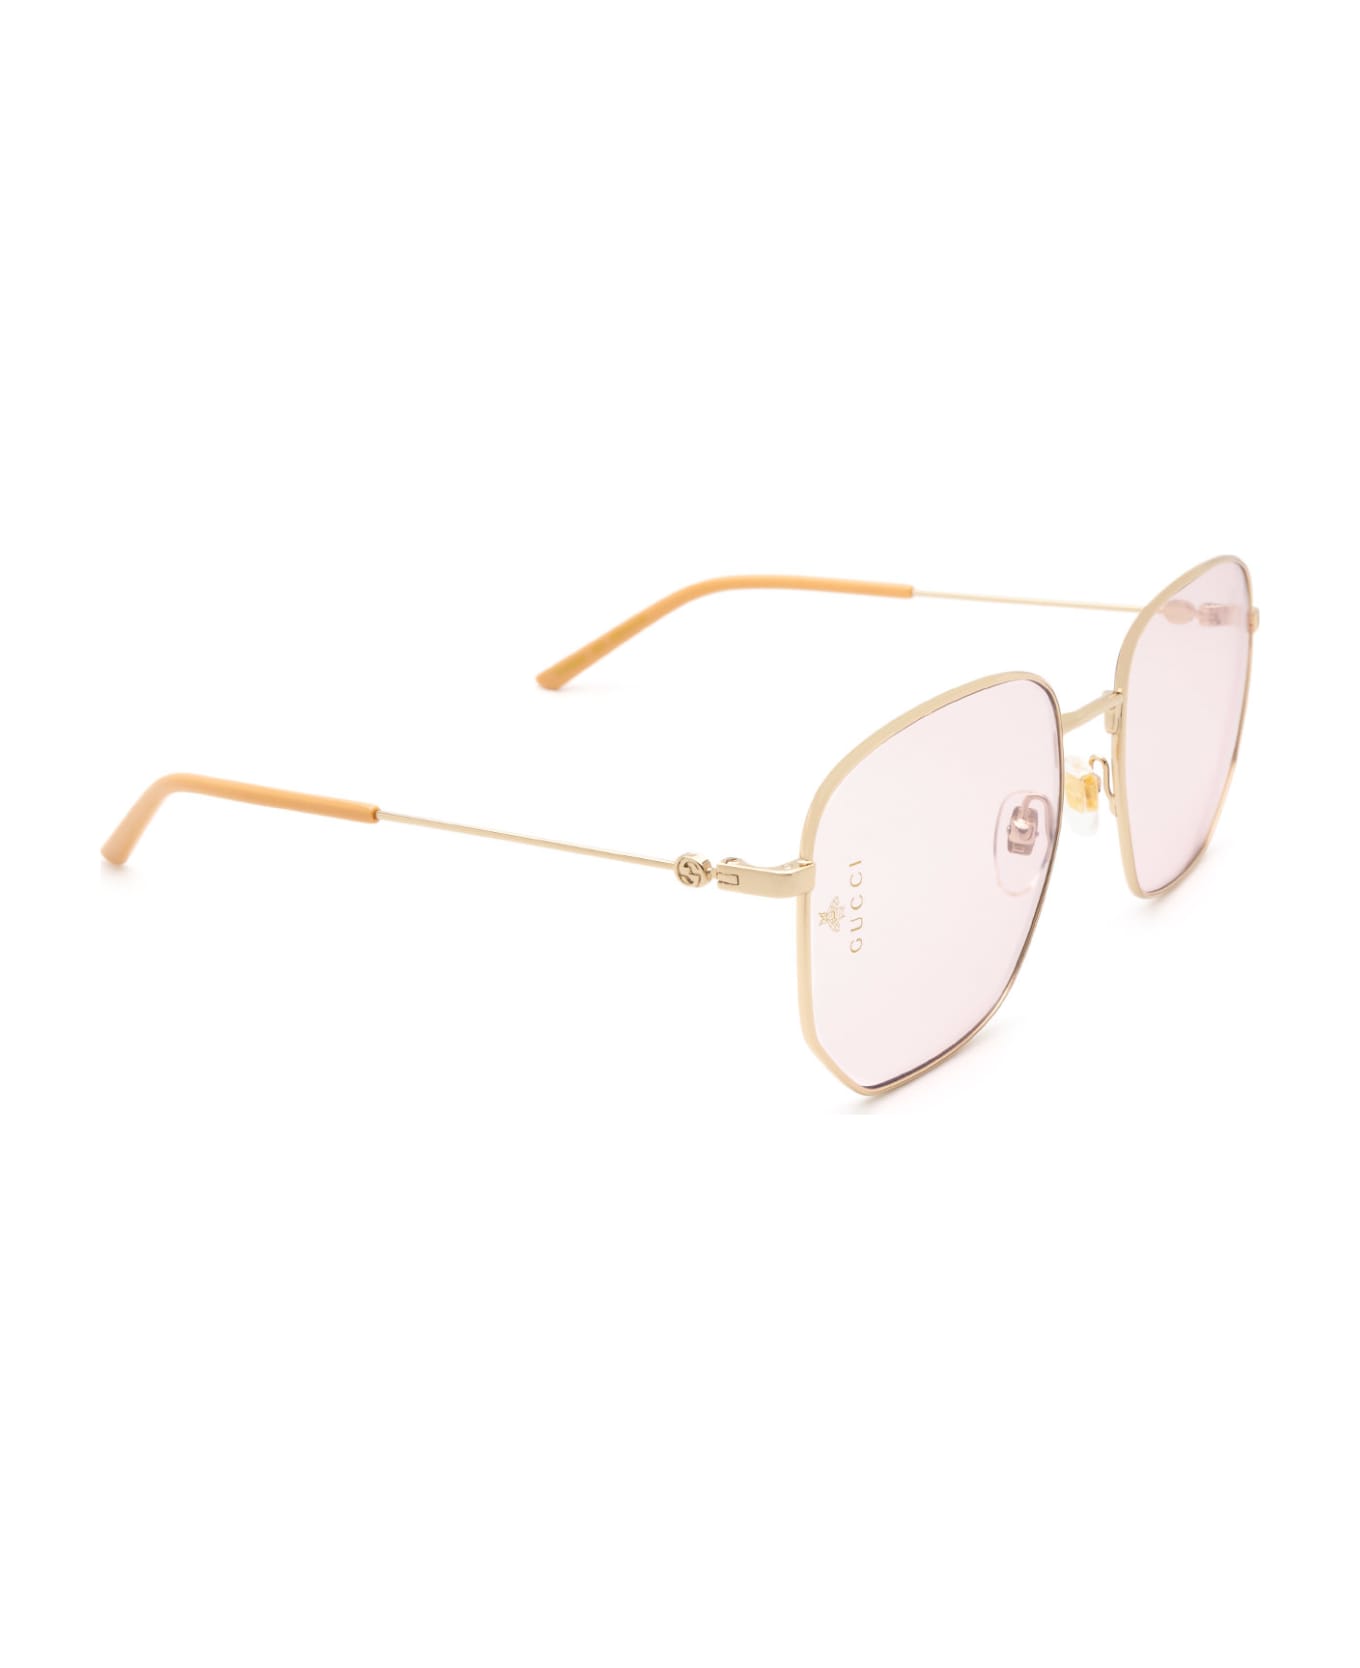 Gucci Eyewear Gg0396s Gold Sunglasses - Gold サングラス